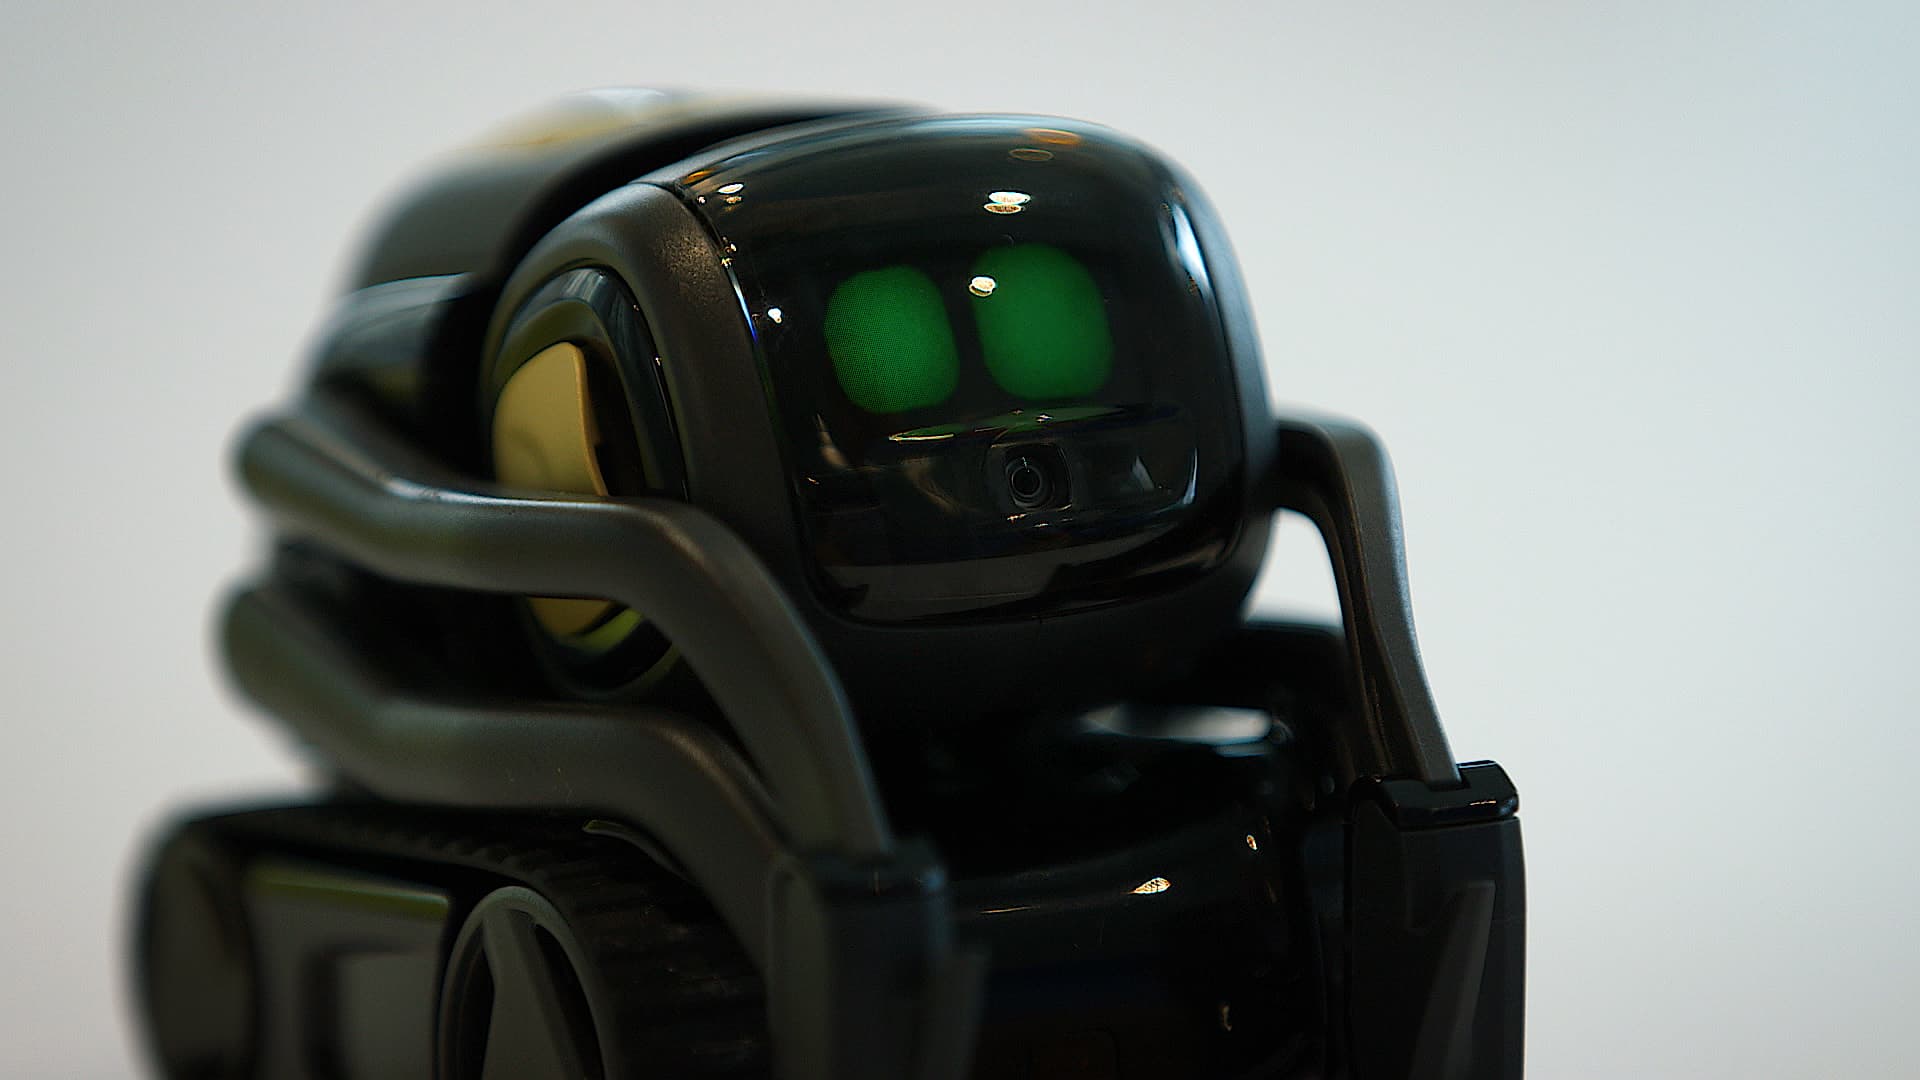 Anki home robot Vector is like Amazon Alexa — but cuter